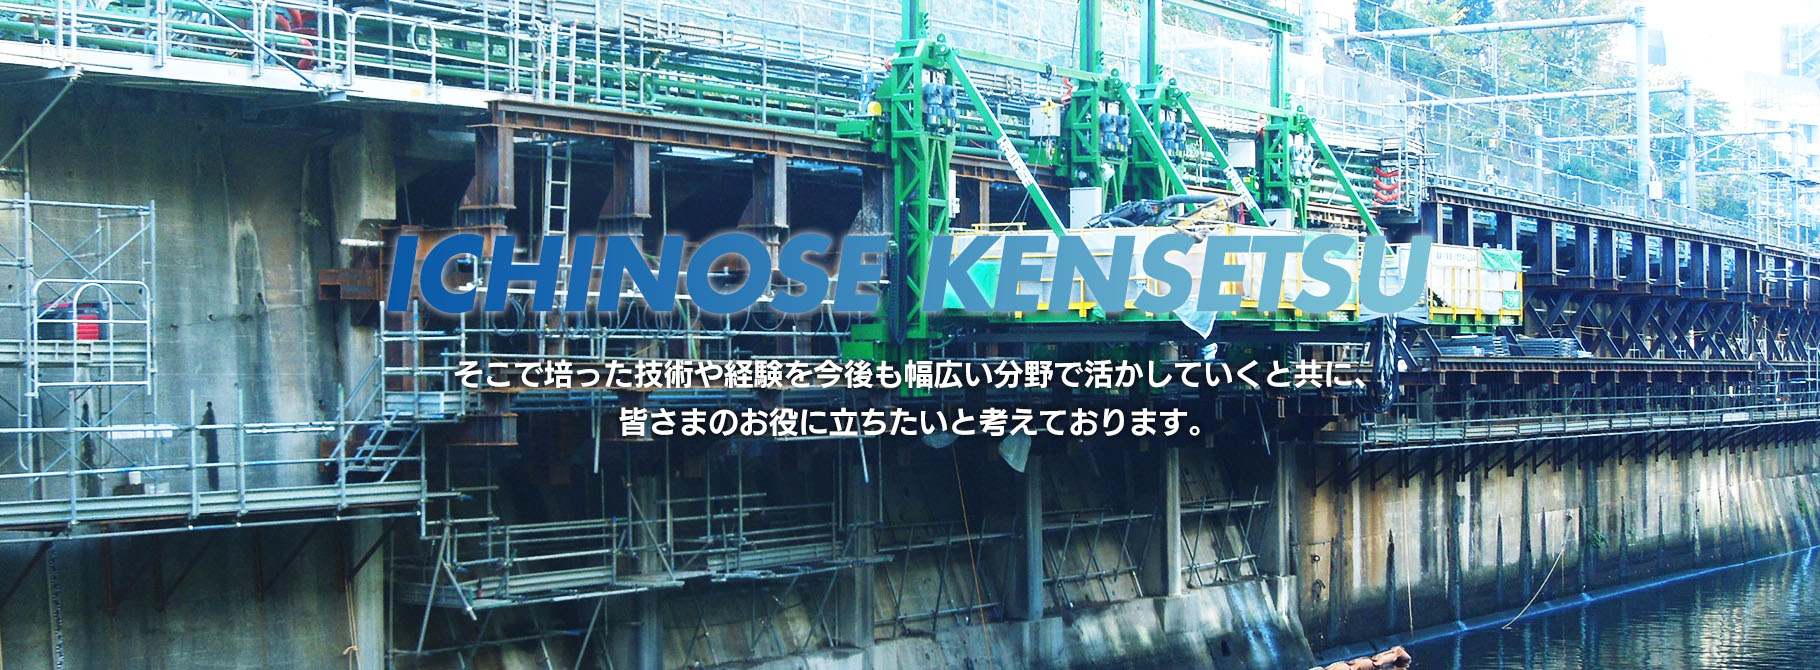 ICHINOSE KENSETSU そこで培った技術や経験を今後も幅広い分野で活かしていくと共に、皆さまのお役に立ちたいと考えております。